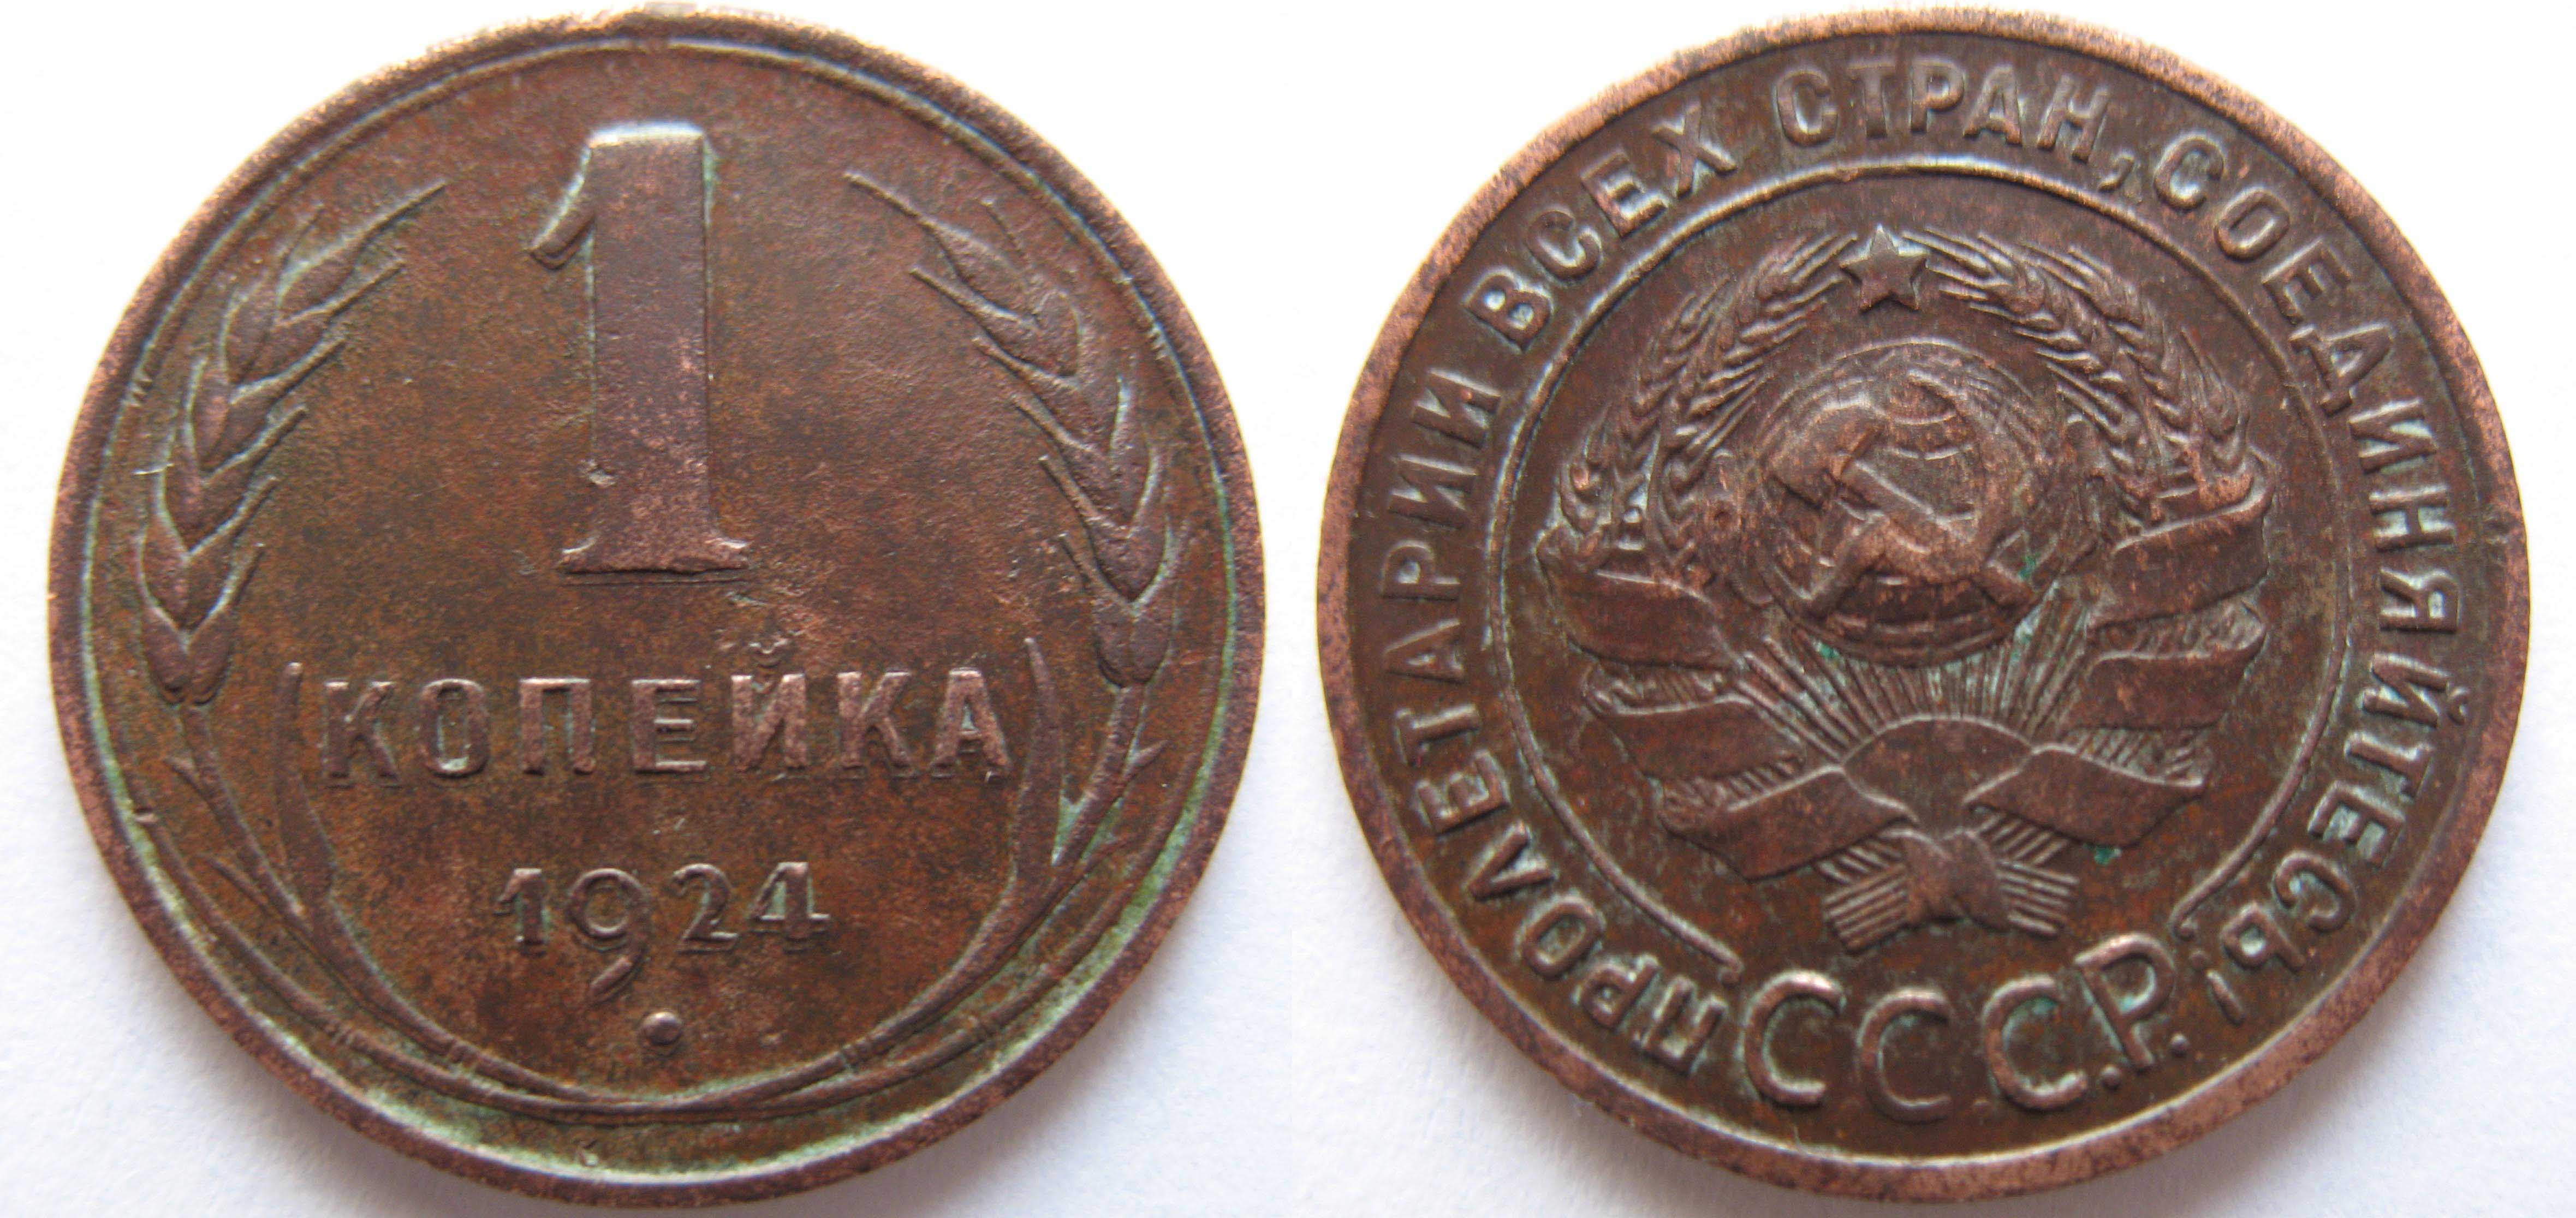 Монета 5 копеек 1924 год. СССР монета 1924 года 5 копеек. Монета 5 копеек 1924 года. Медный пятак 1924. Монетка 5 копеек с 1924 года.